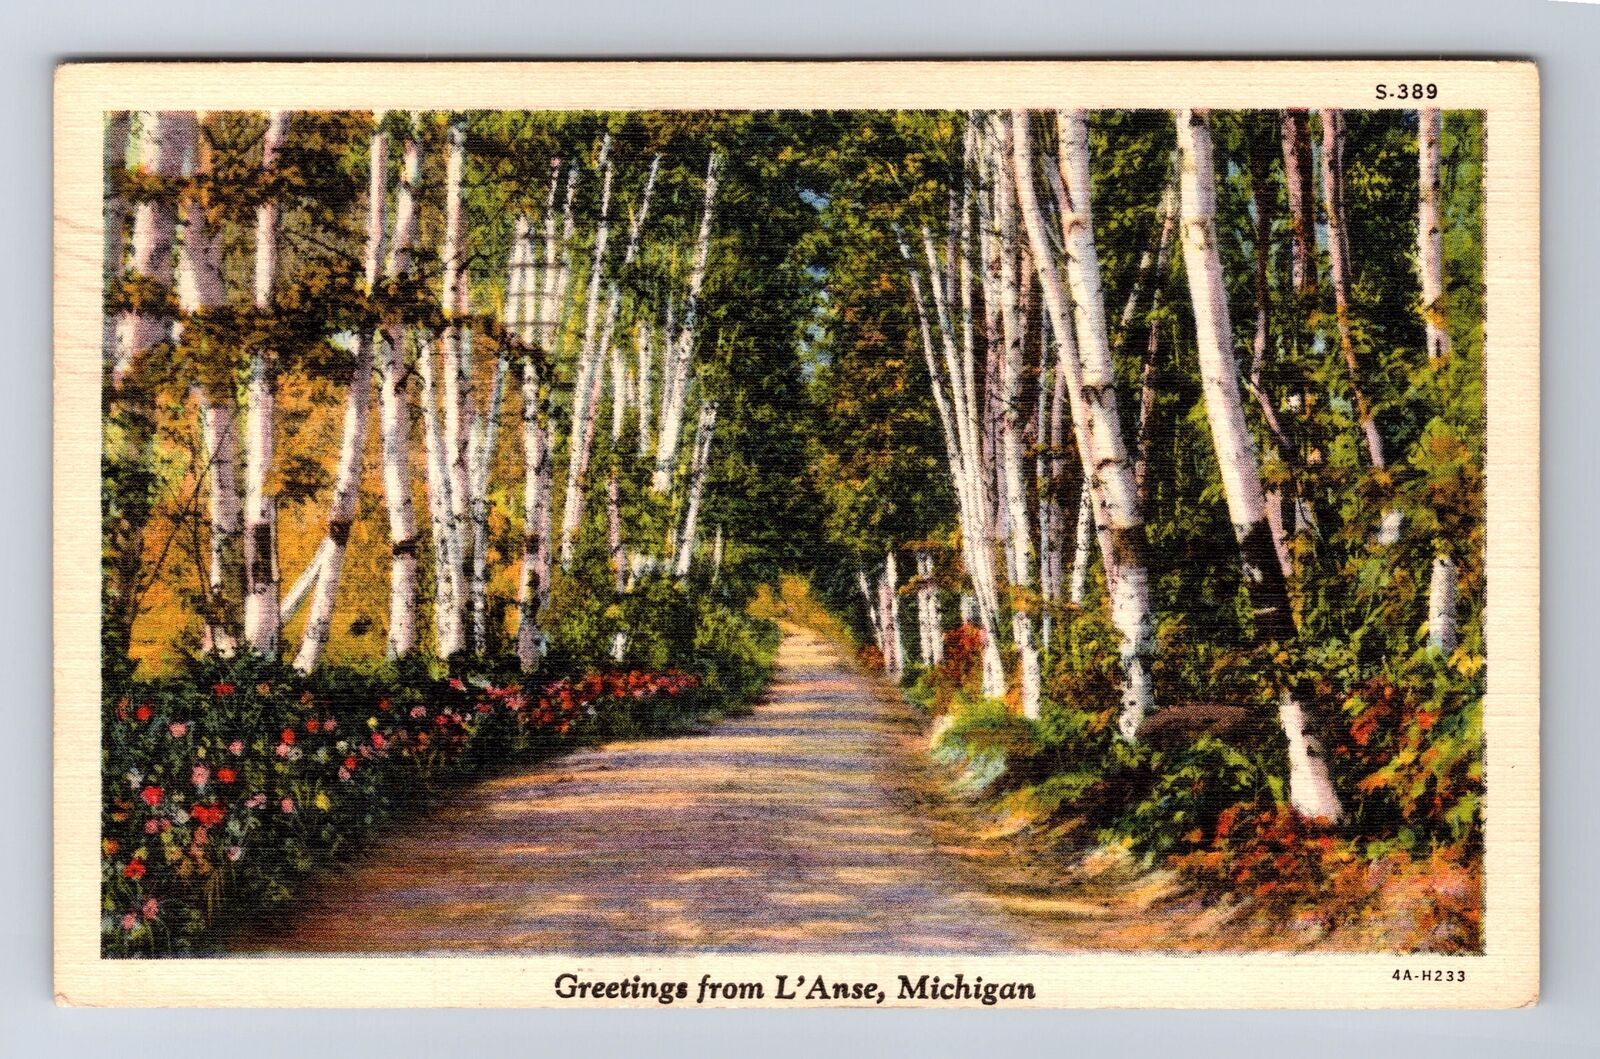 L'Anse MI-Michigan, Scenic Greetings, Antique Souvenir Vintage Postcard